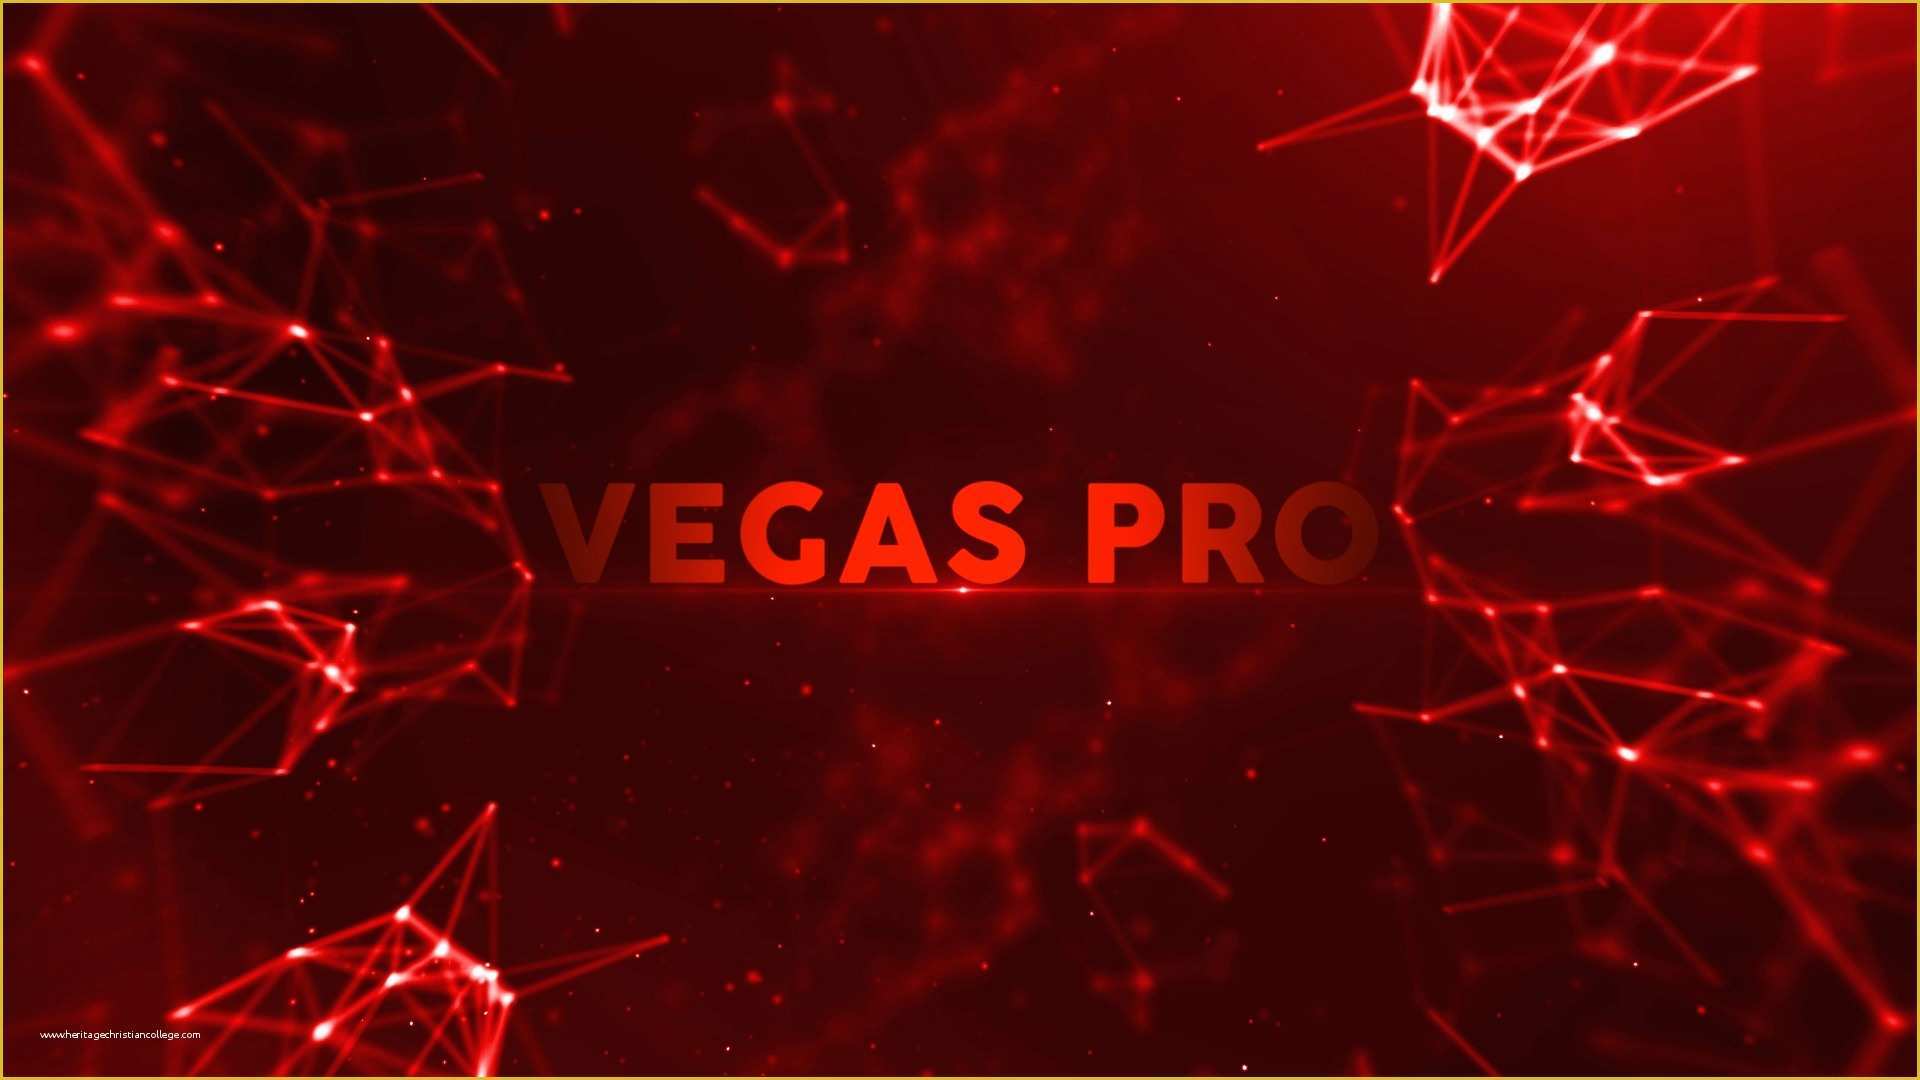 Sony Vegas Pro Slideshow Templates Free Download Of top 10 Free 2d Intro Templates 2018 sony Vegas Pro 8 – Rkmfx